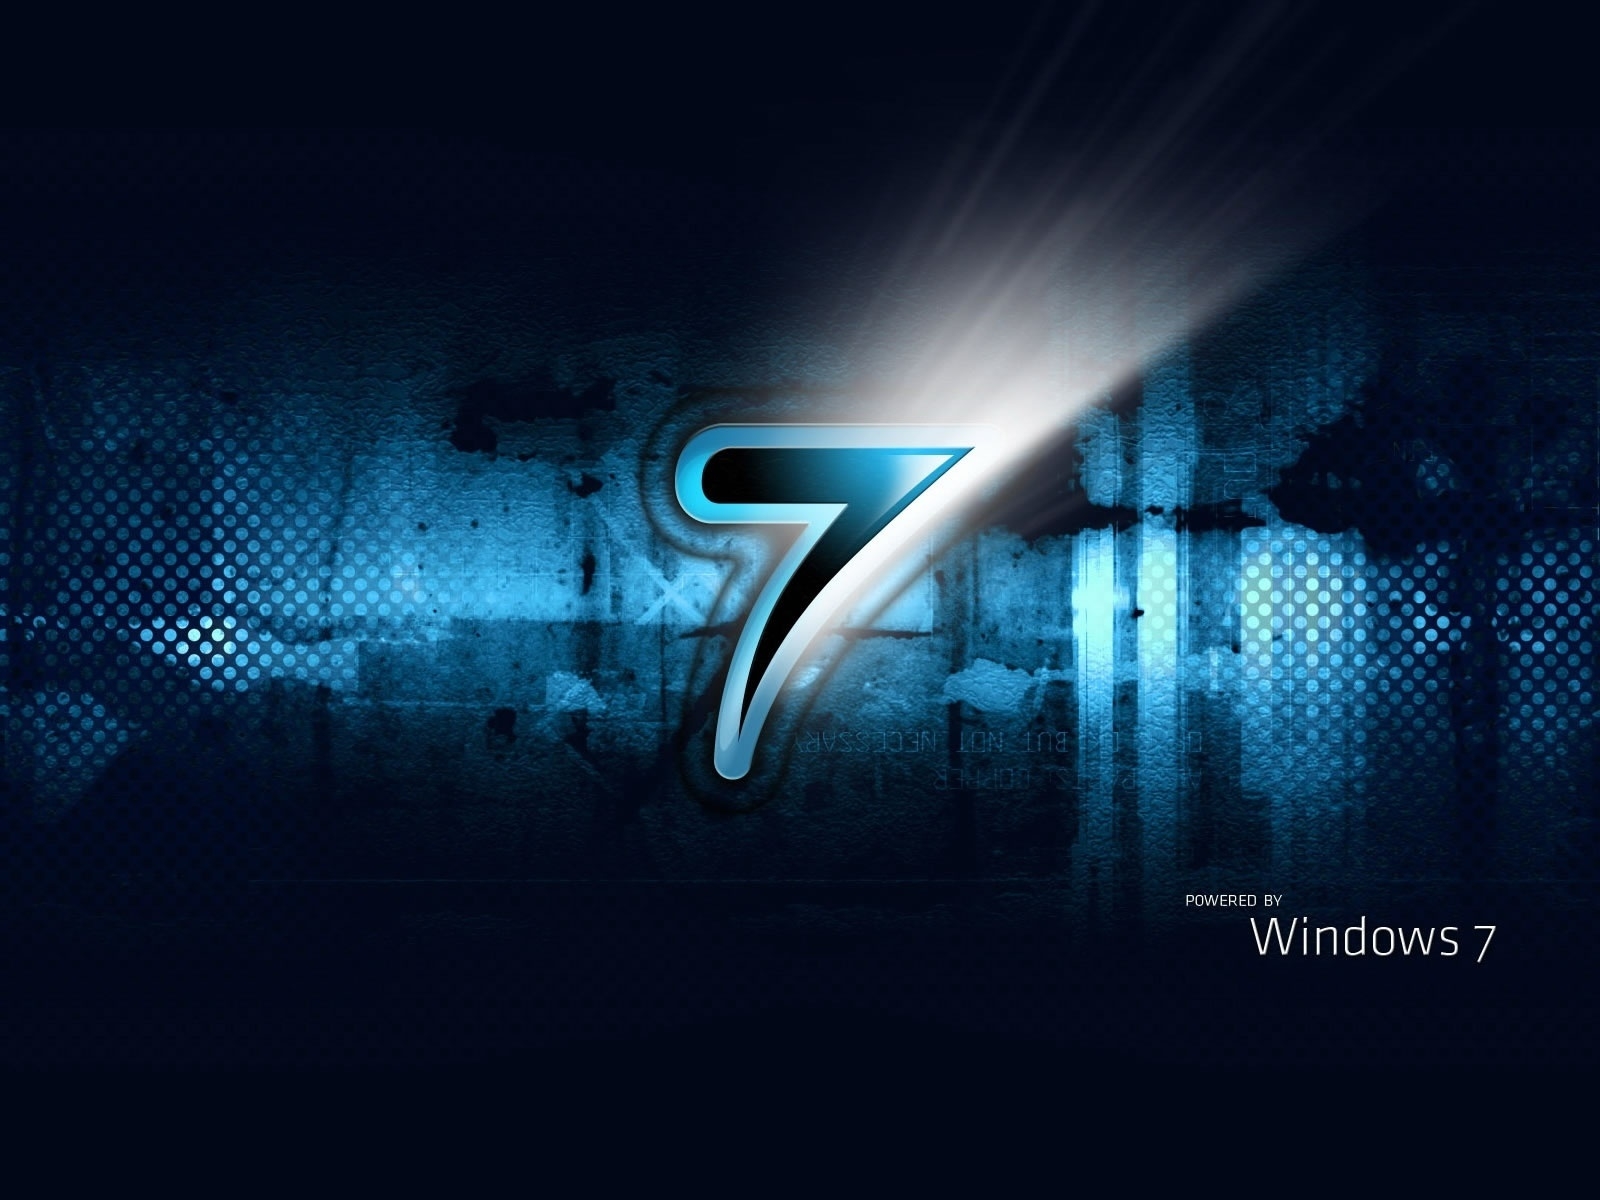 Superb Windows 7 for 1600 x 1200 resolution